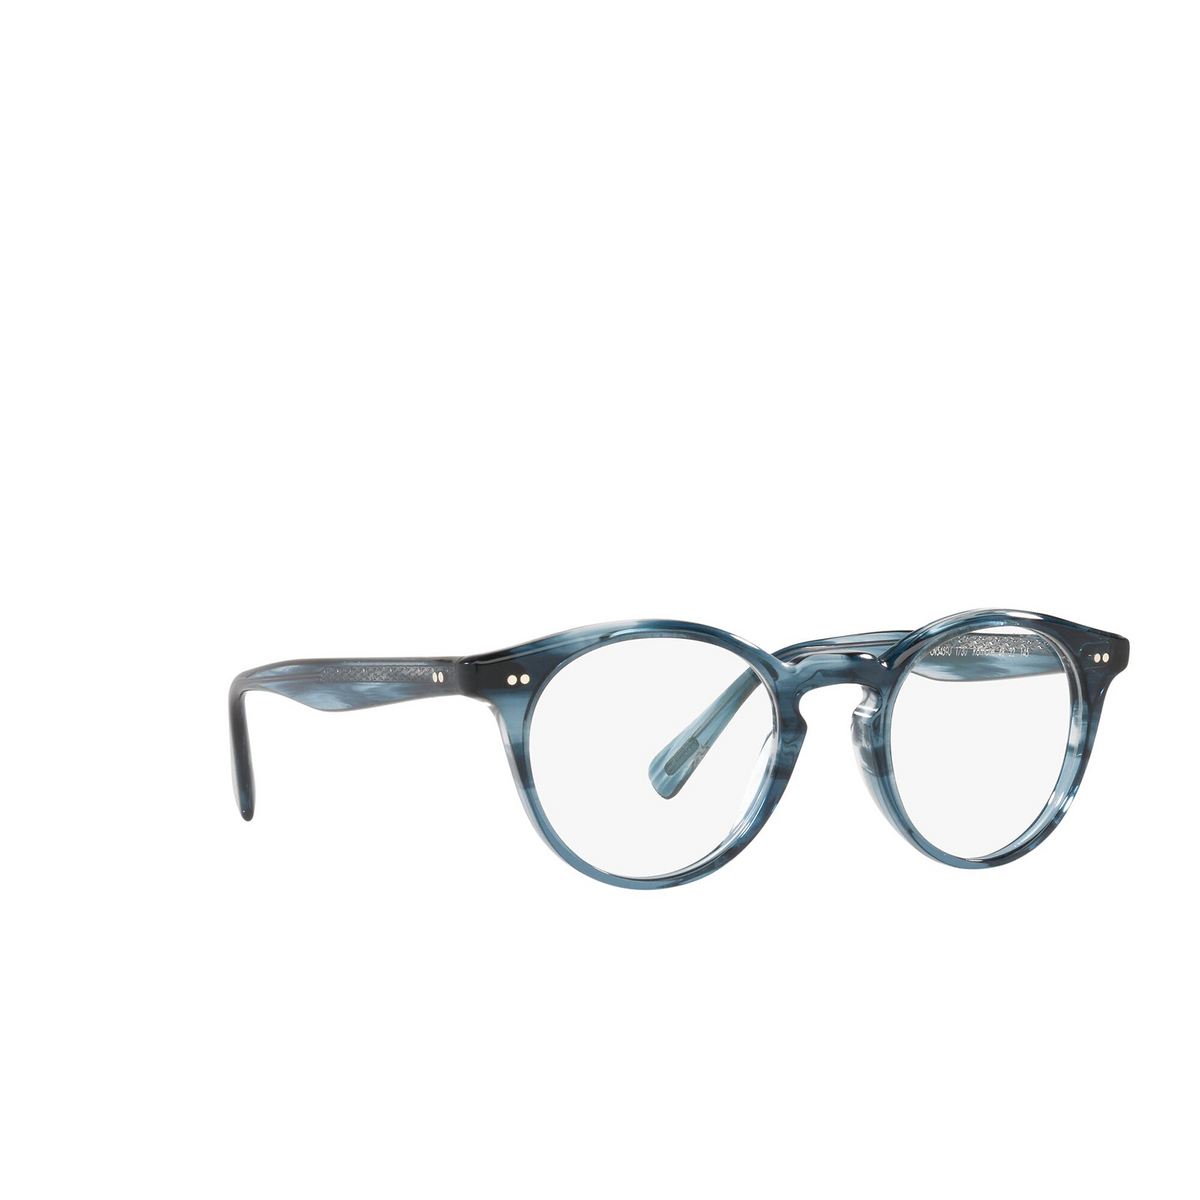 Oliver Peoples® Round Eyeglasses: Romare OV5459U color Dark Blue Vsb 1730 - three-quarters view.